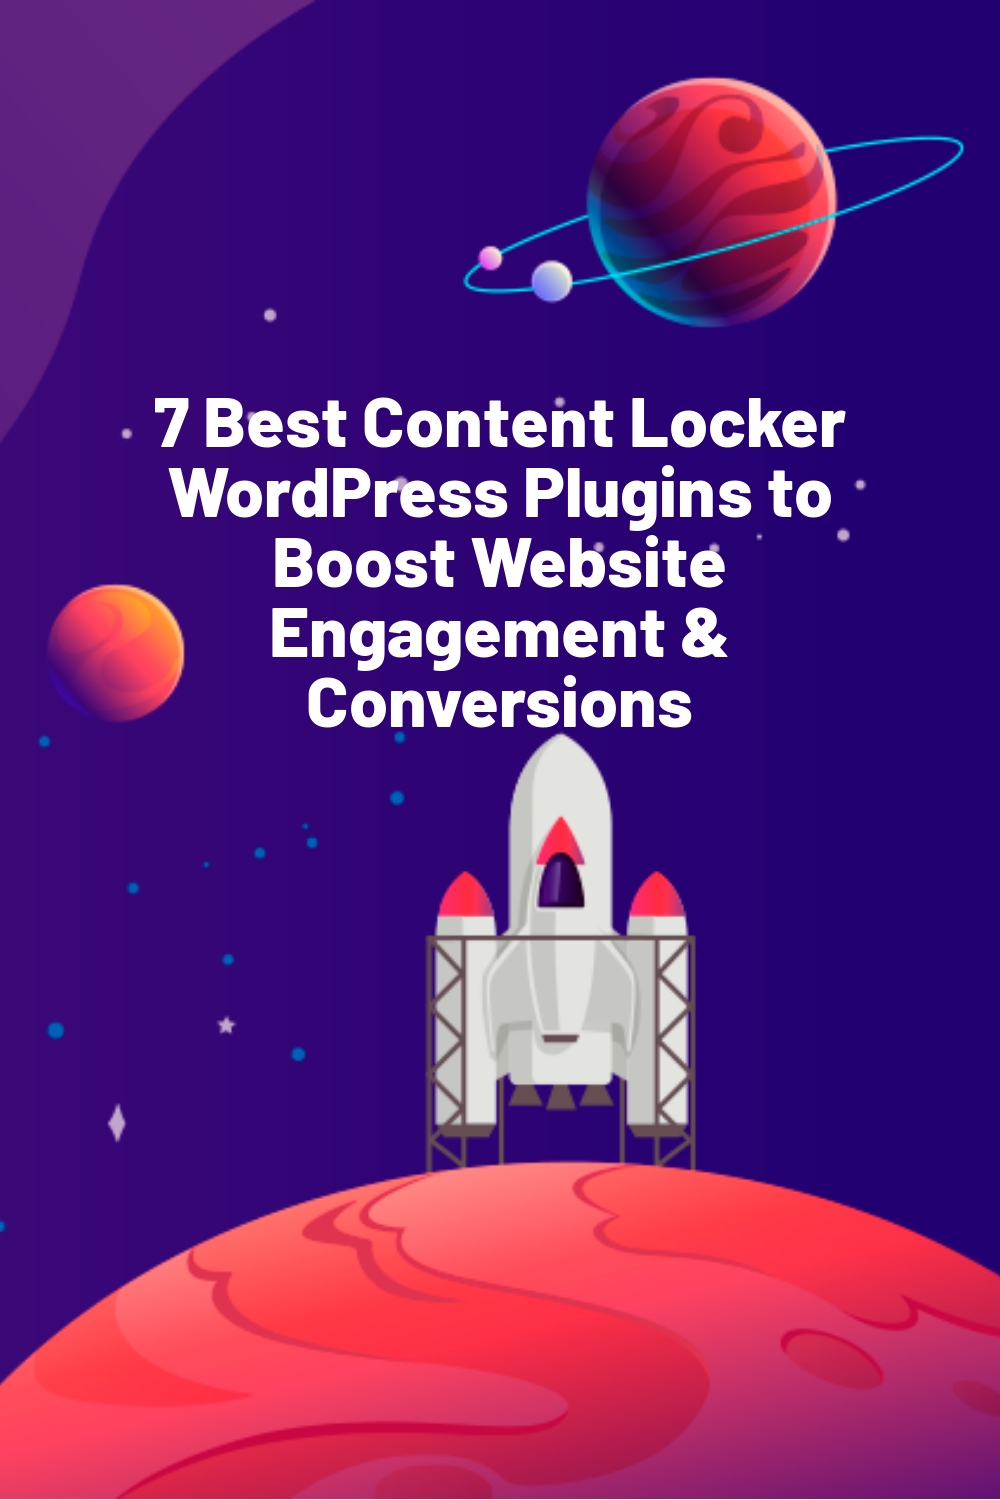 7 Best Content Locker WordPress Plugins to Boost Website Engagement & Conversions